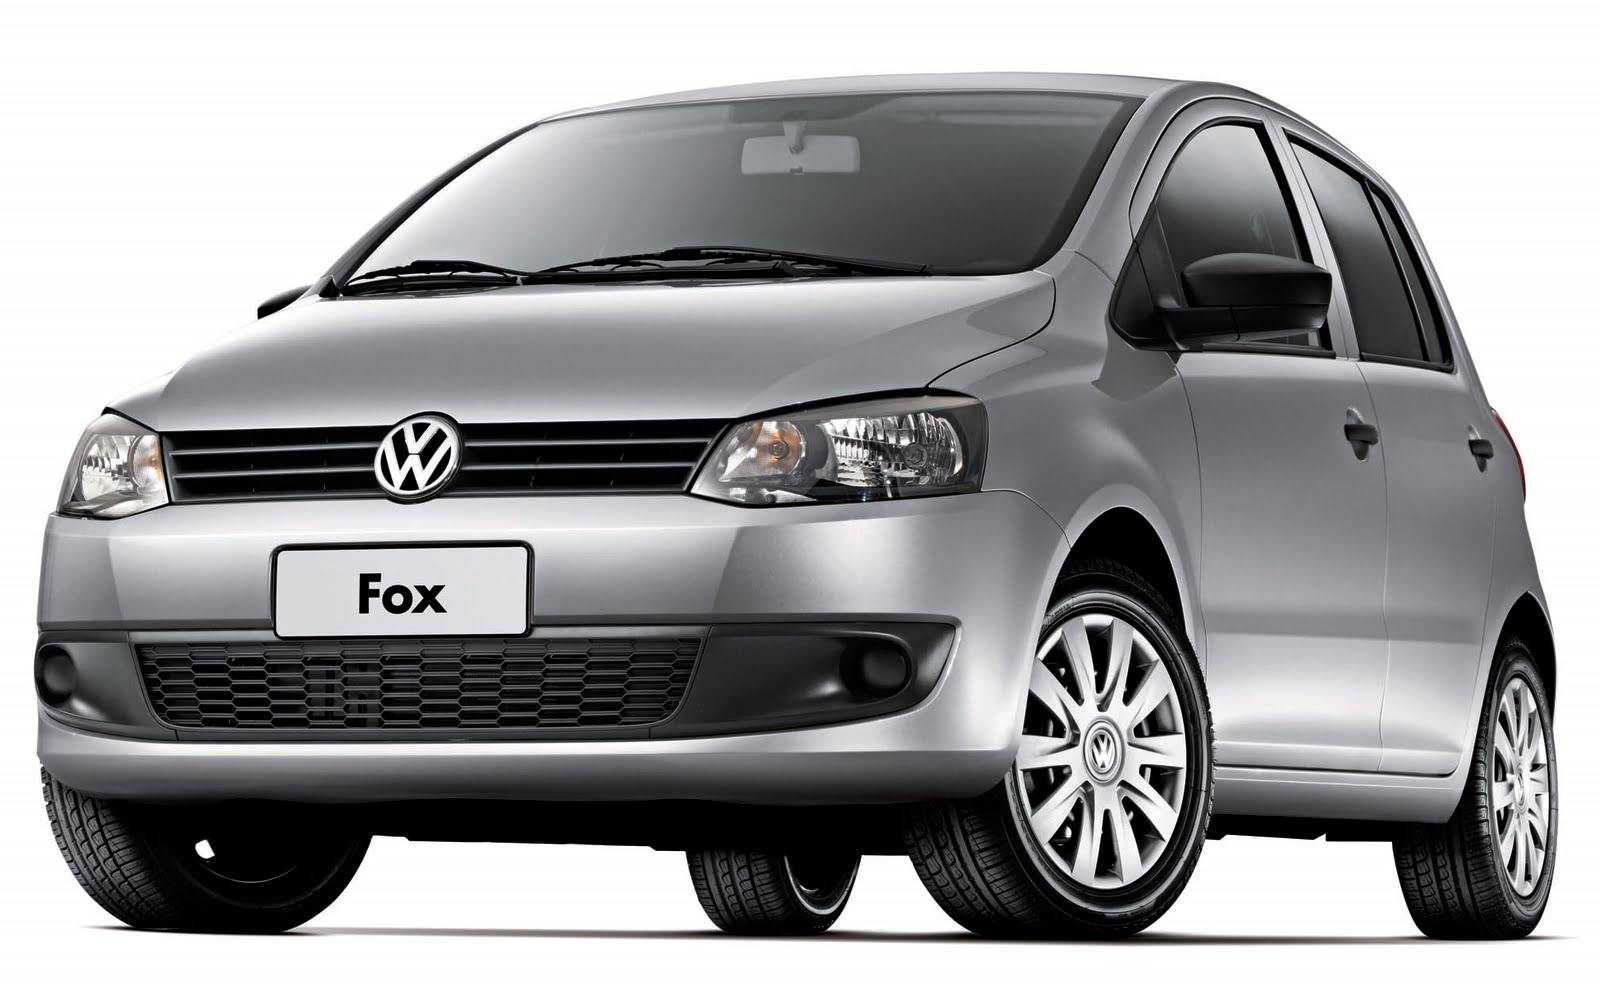 Fox 2011. Фольксваген Фокс 2010. Фольксваген Фокс 2013-. Volkswagen Fox 3 поколение. Фольксваген Фокс хэтчбек 2.